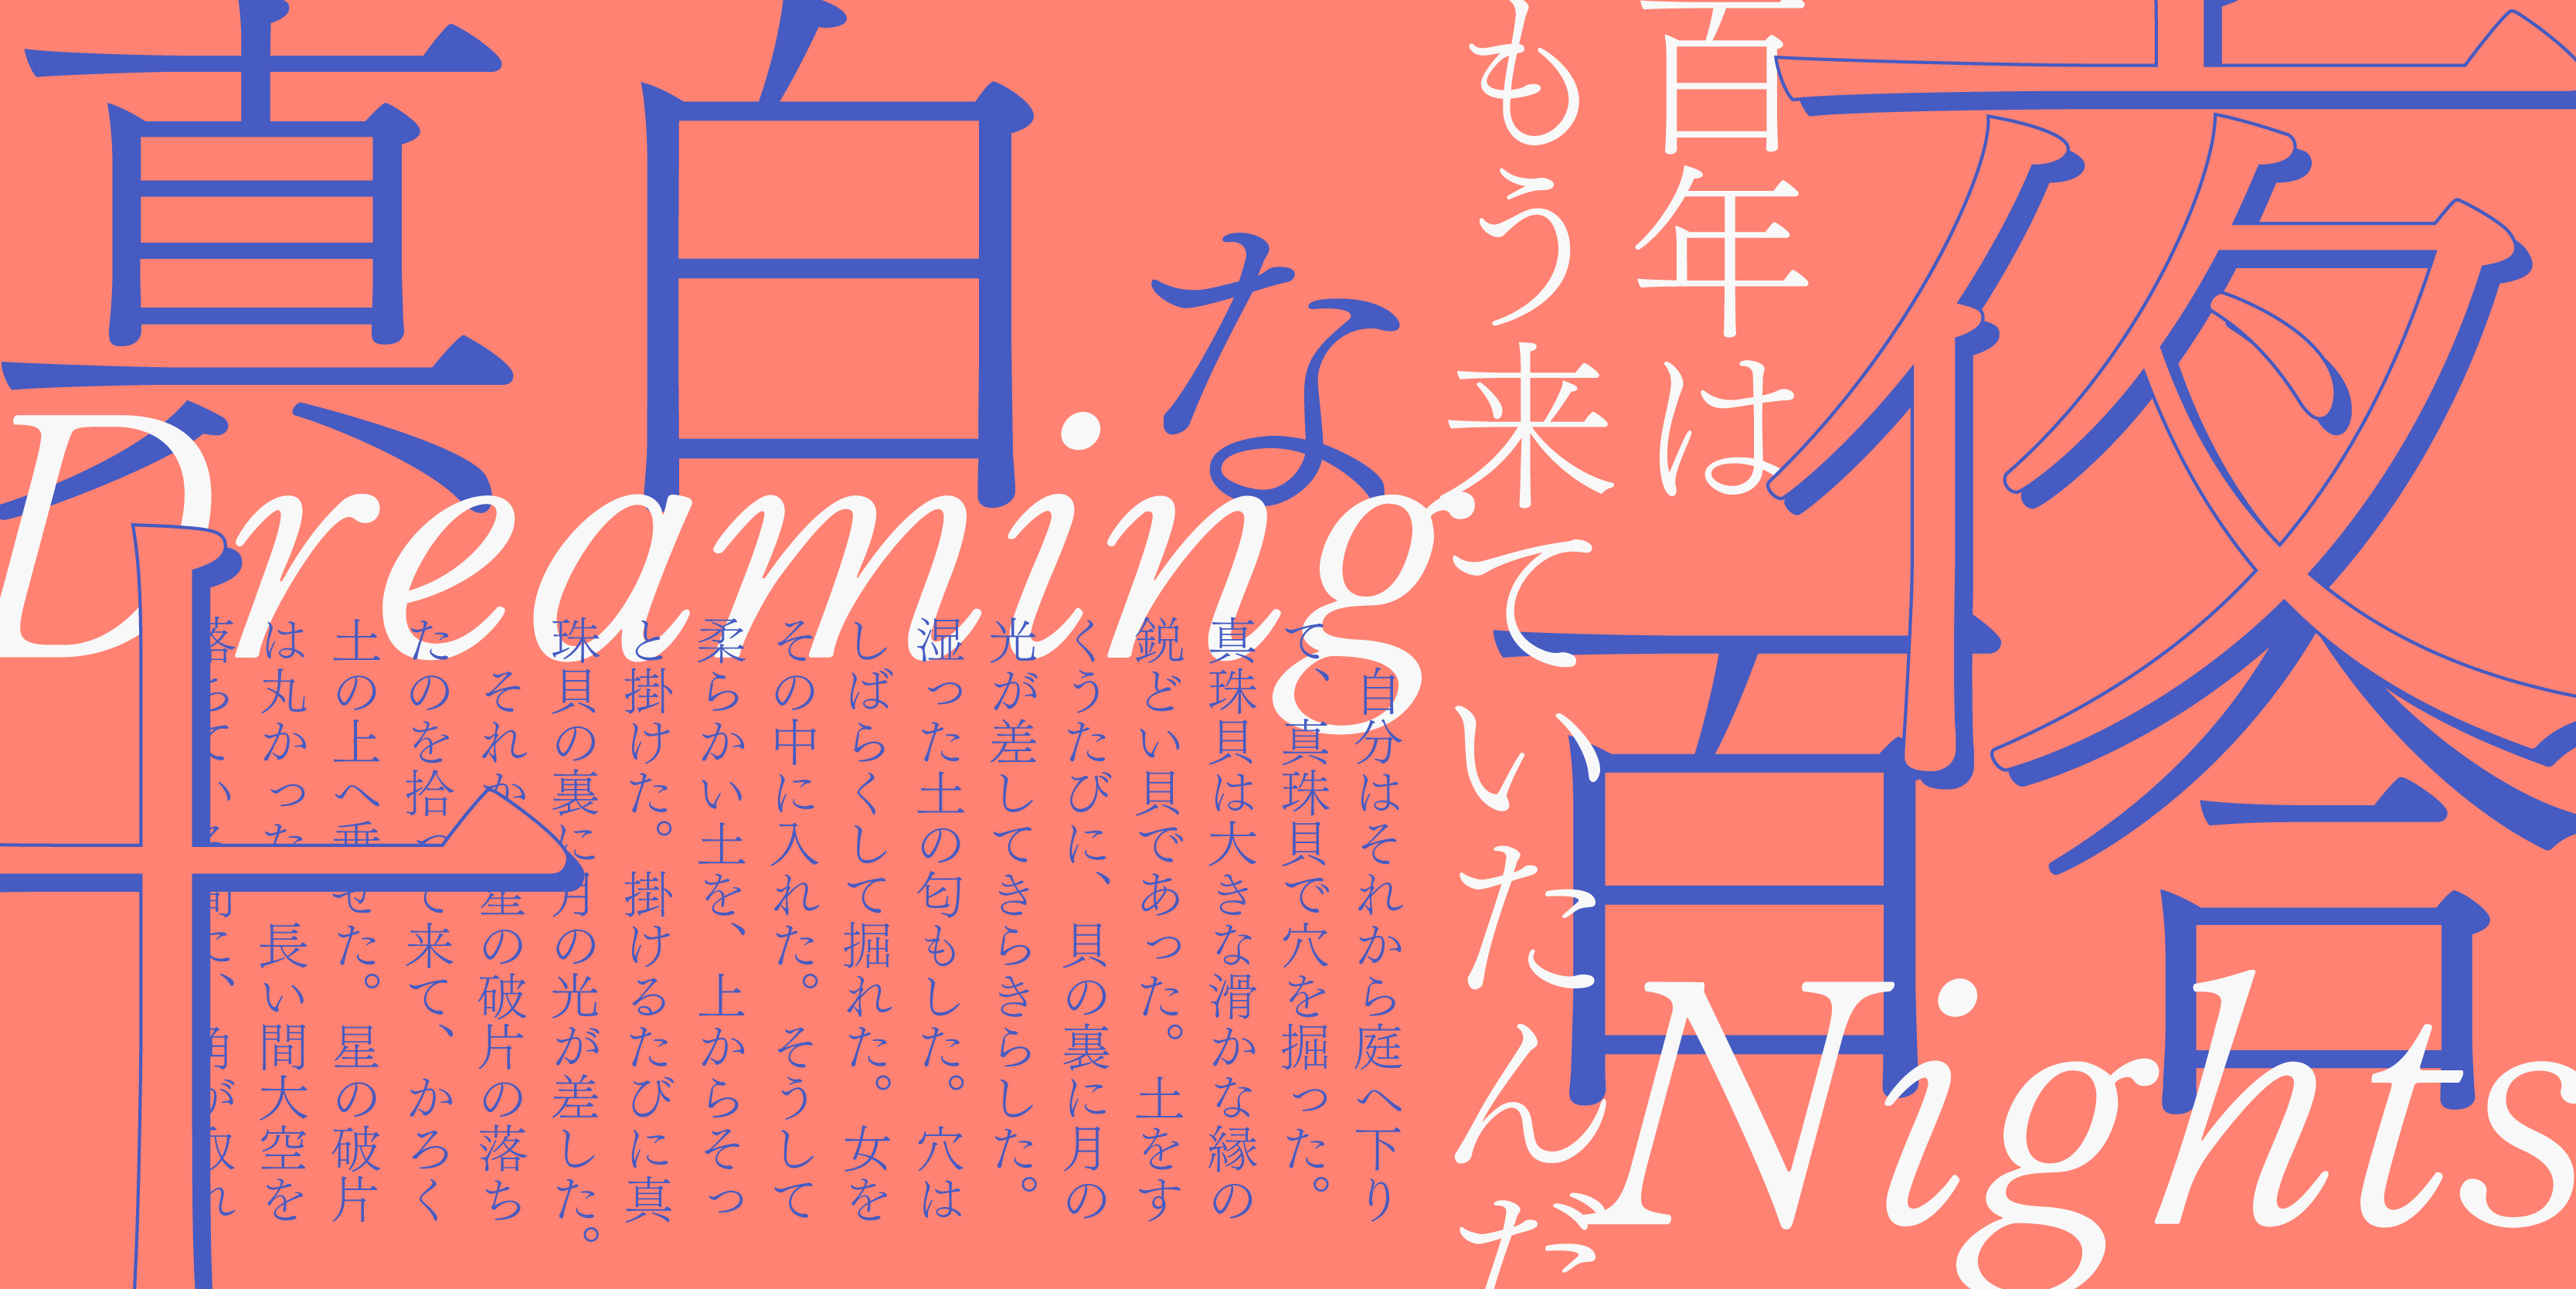 Card displaying FOT-TsukuMin Pr6N typeface in various styles